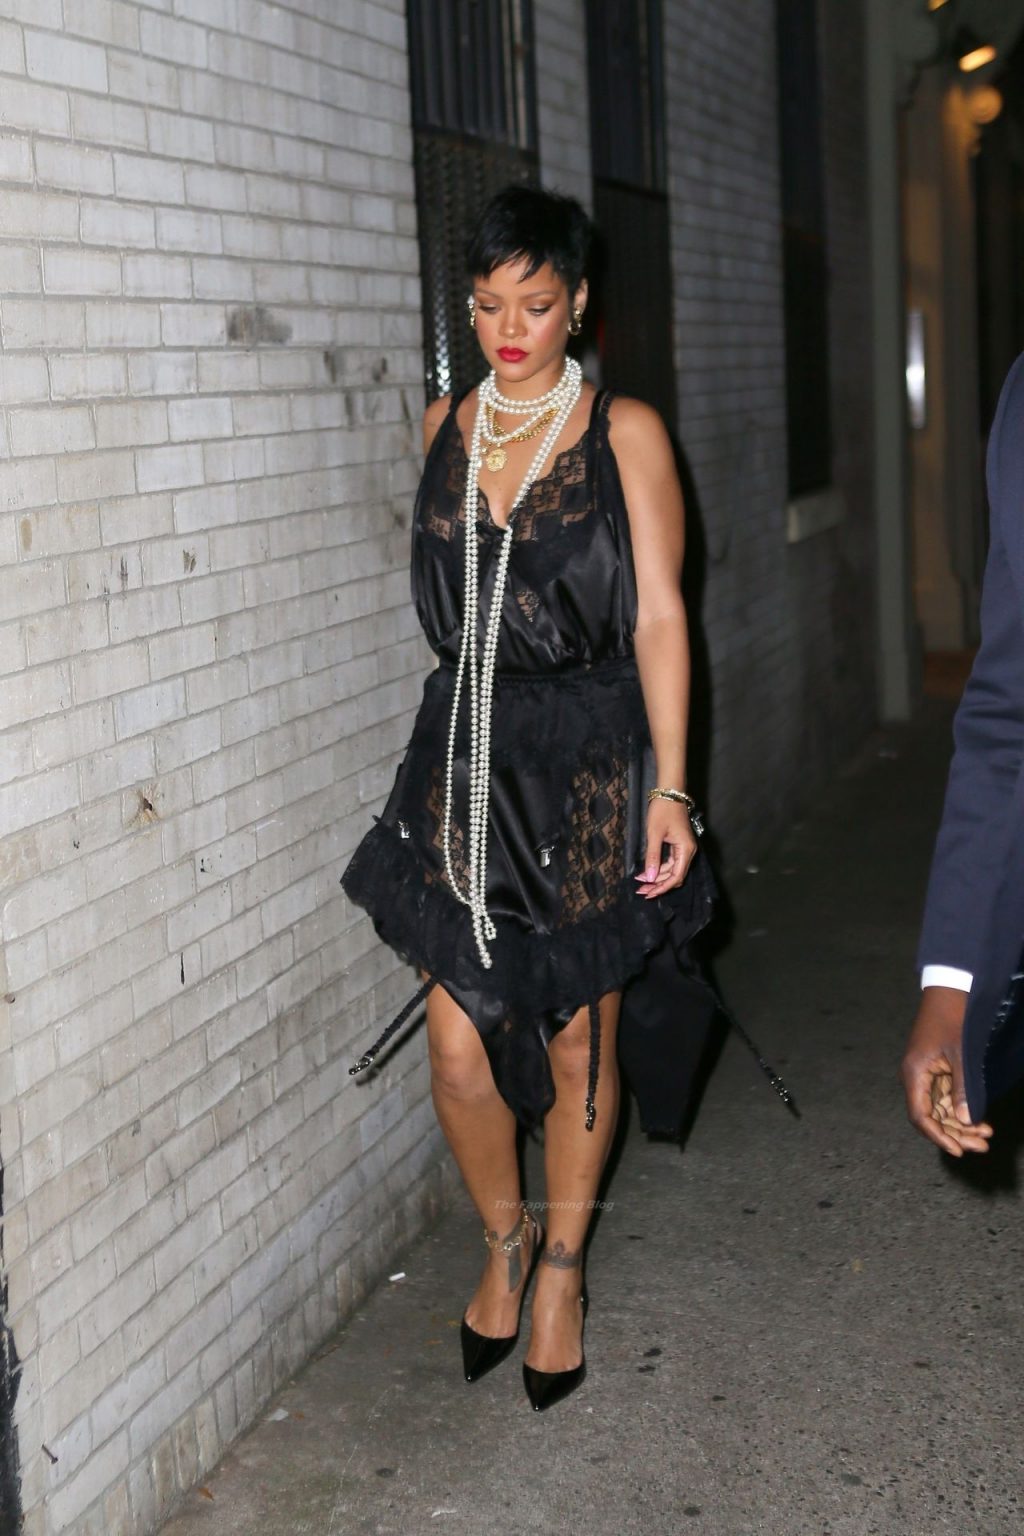 Leggy Rihanna Heads to Dinner at Carbone Italian Restaurant in NYC (16 Photos)